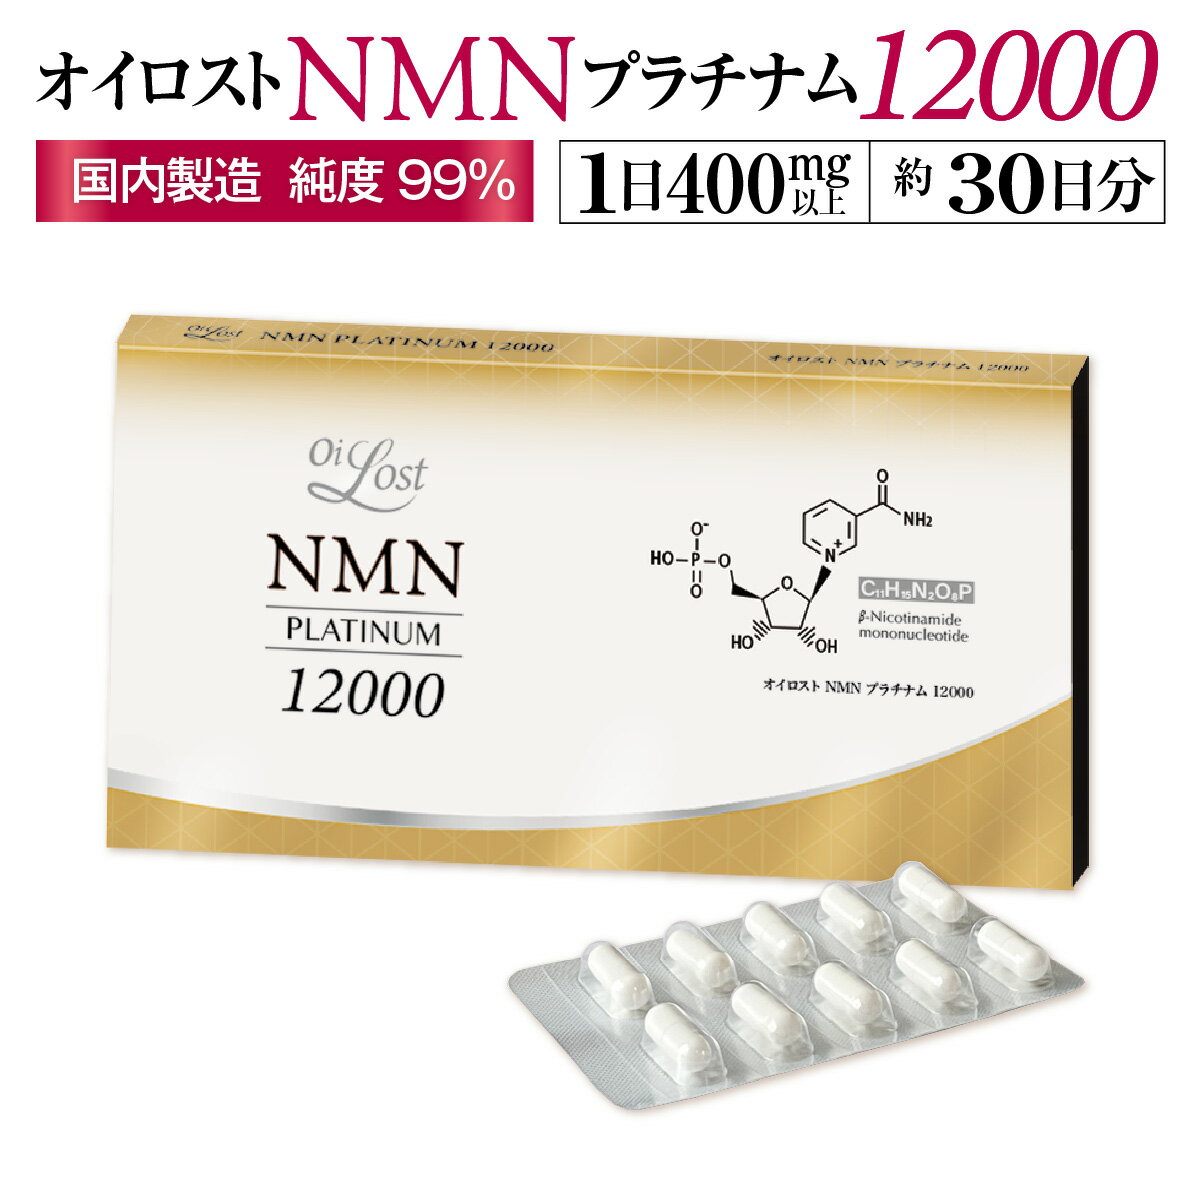 NMN含有量保証 1粒200mg以上保証 オイロスト NMN プラチナム 12000 約1ヶ月分 1箱60カプセル入り NMN サプリ サプリメント 日本製 高純度 高配合 NMN含有量保証 1箱12000mg以上 耐酸性カプセル…